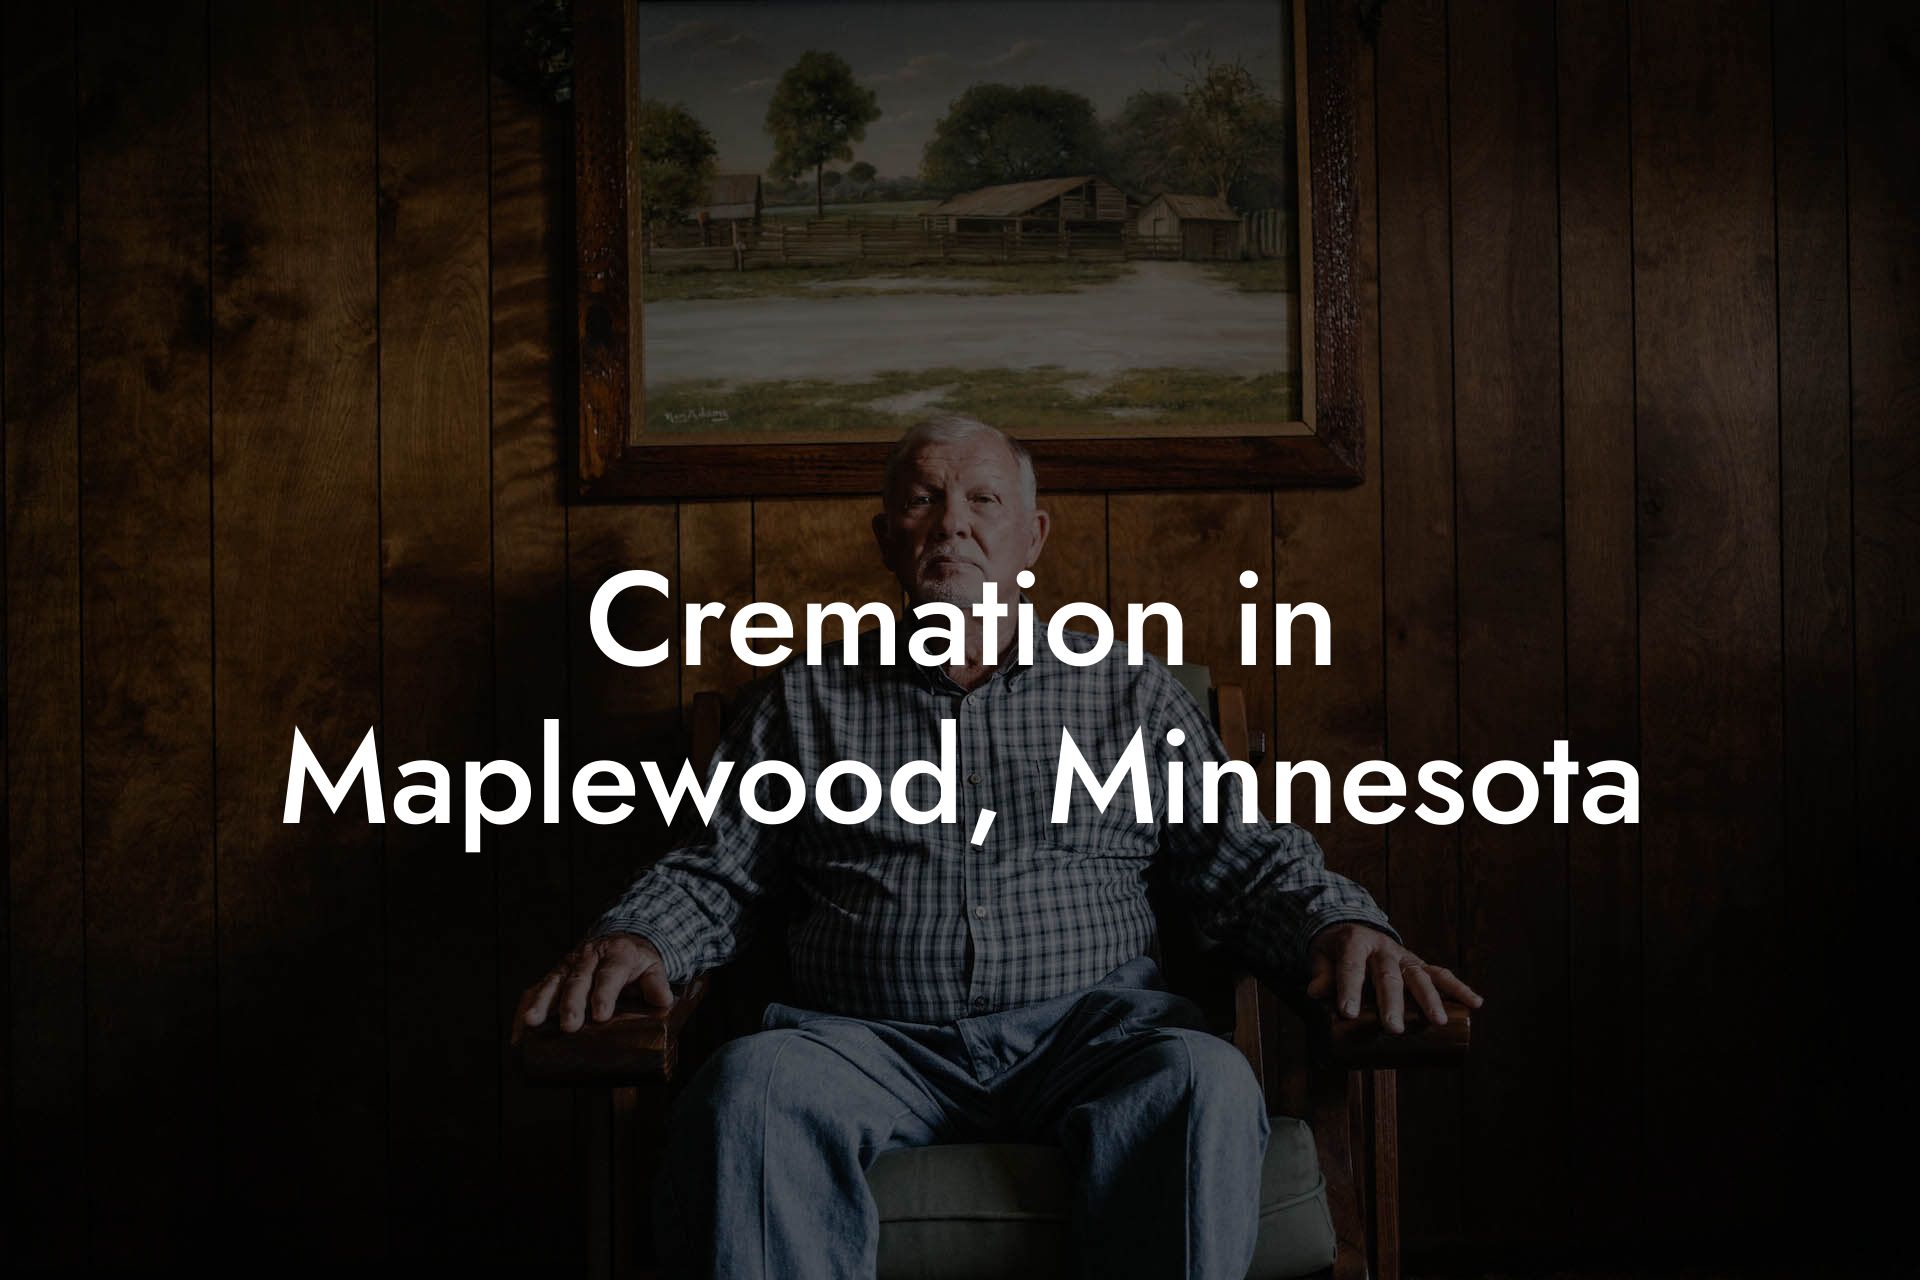 Cremation in Maplewood, Minnesota